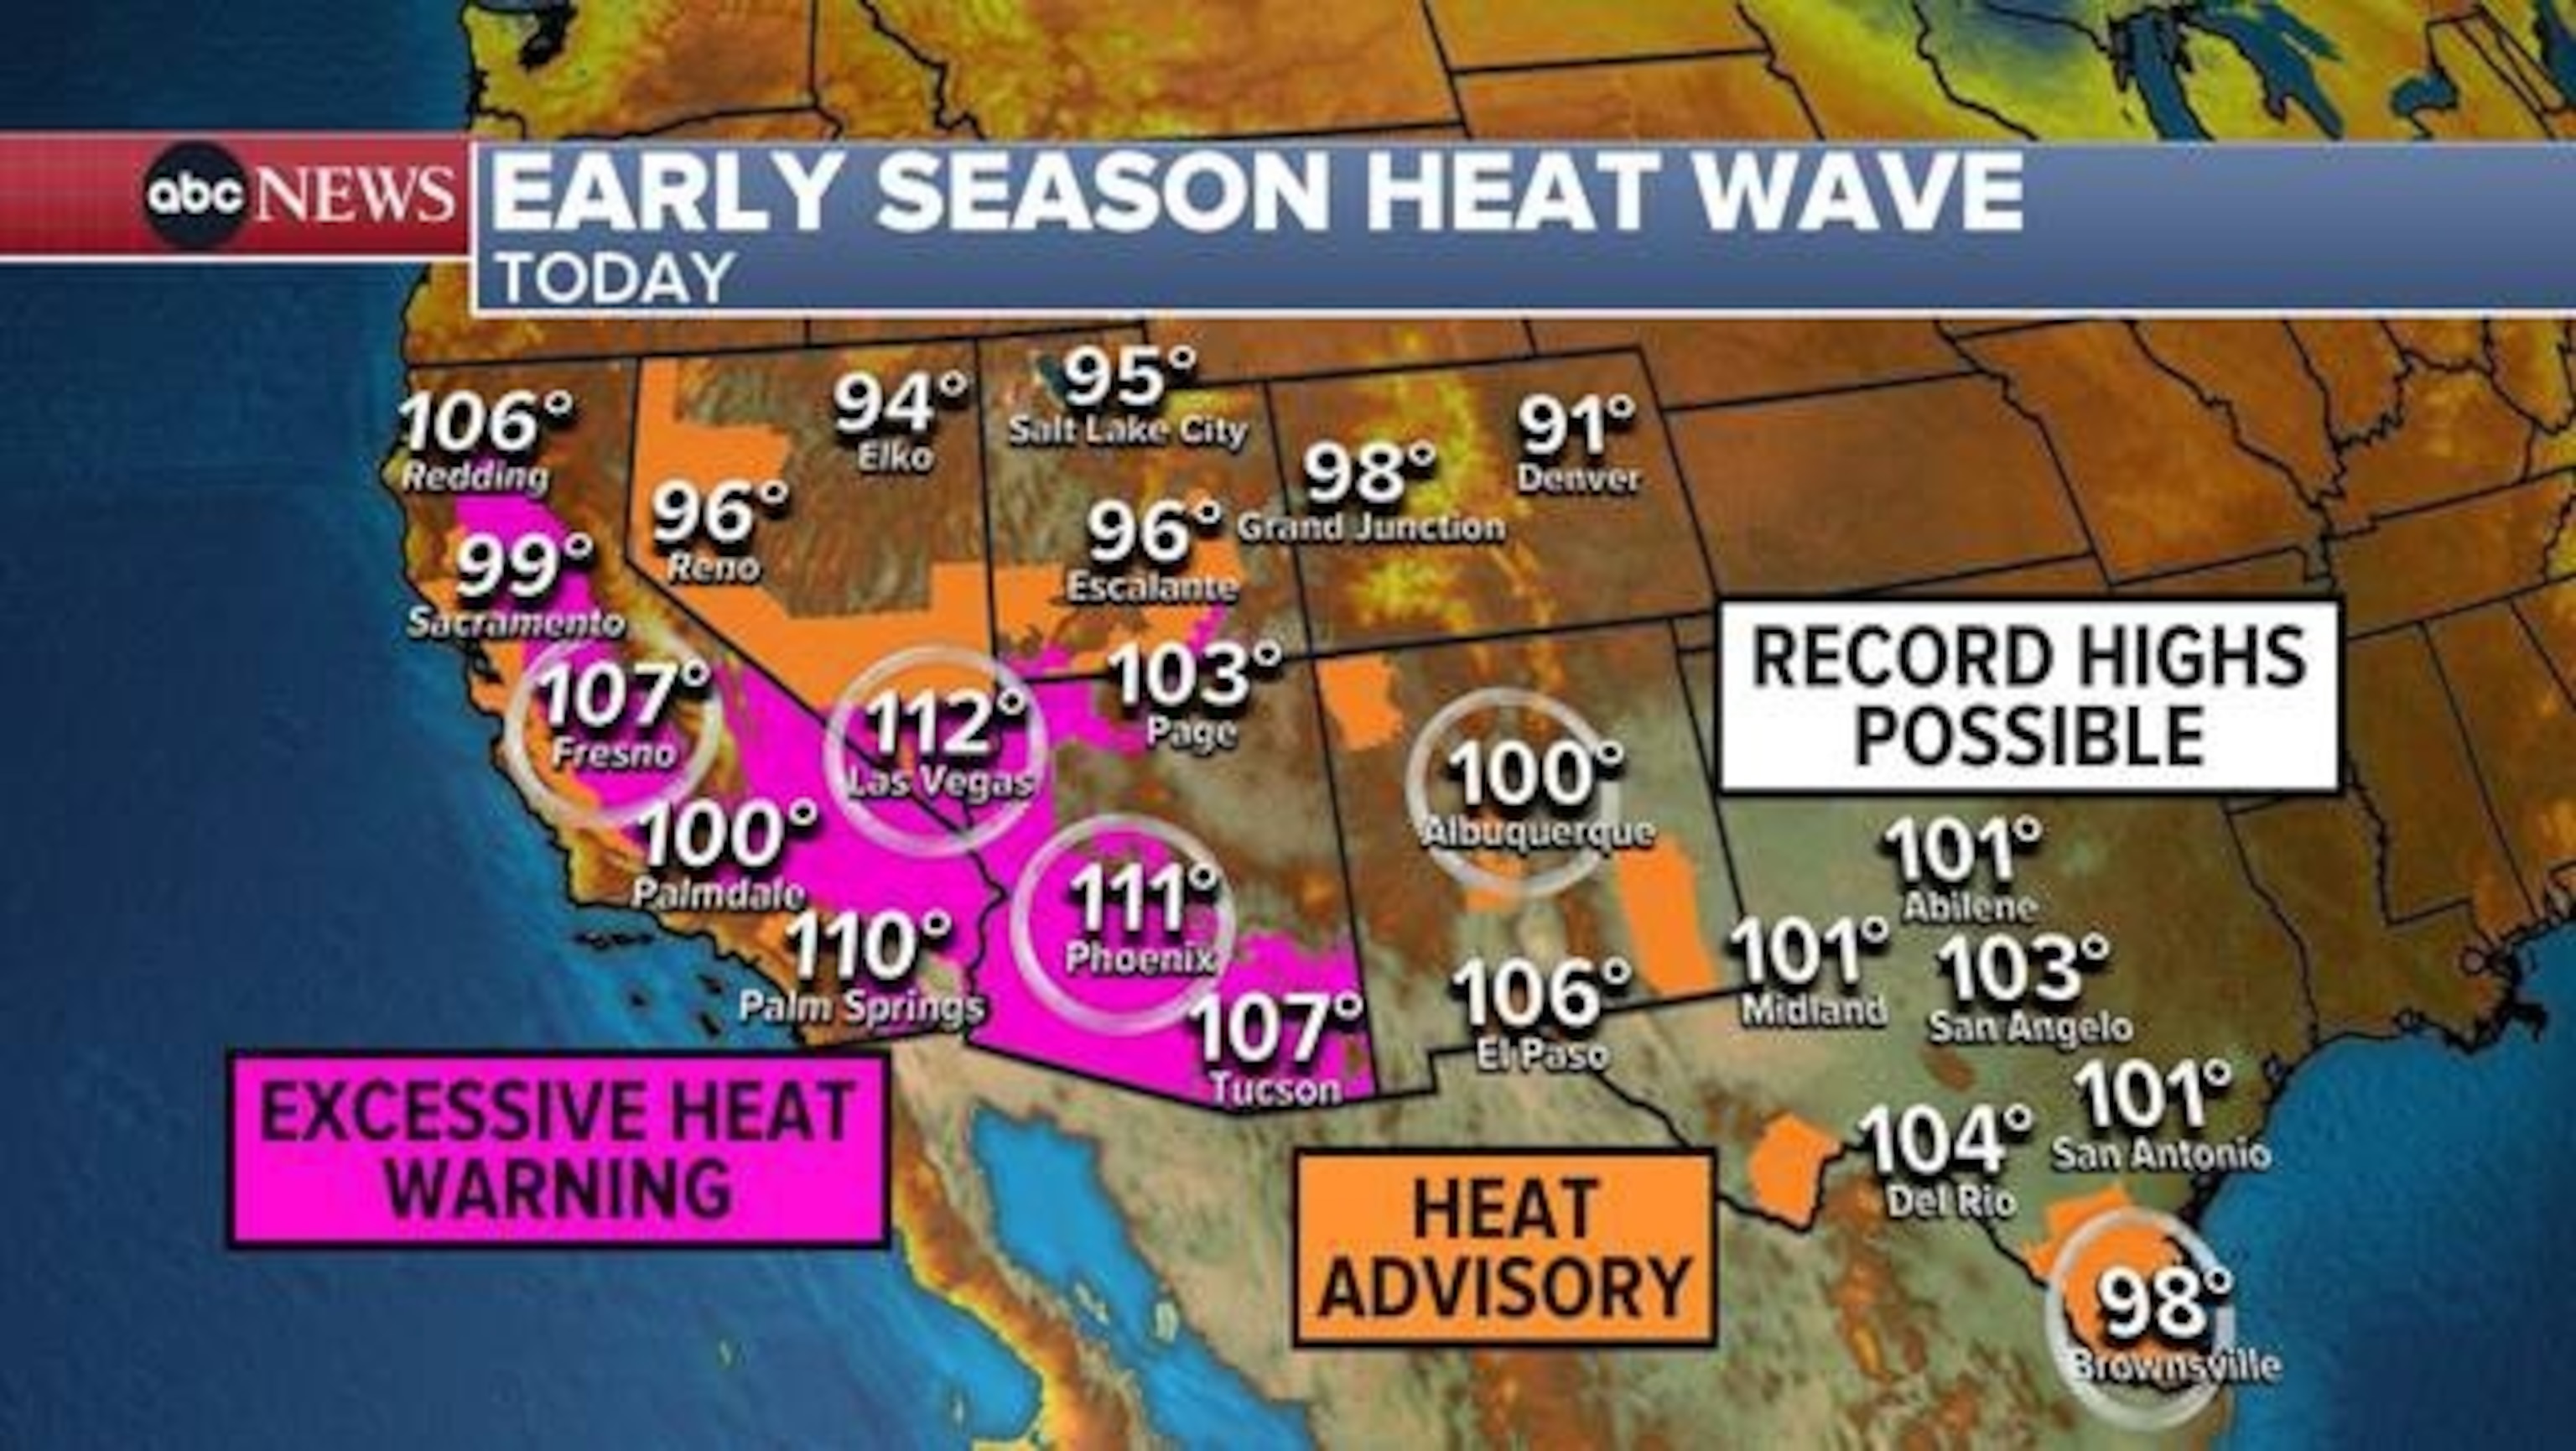 PHOTO: Early Season Heat Wave Map